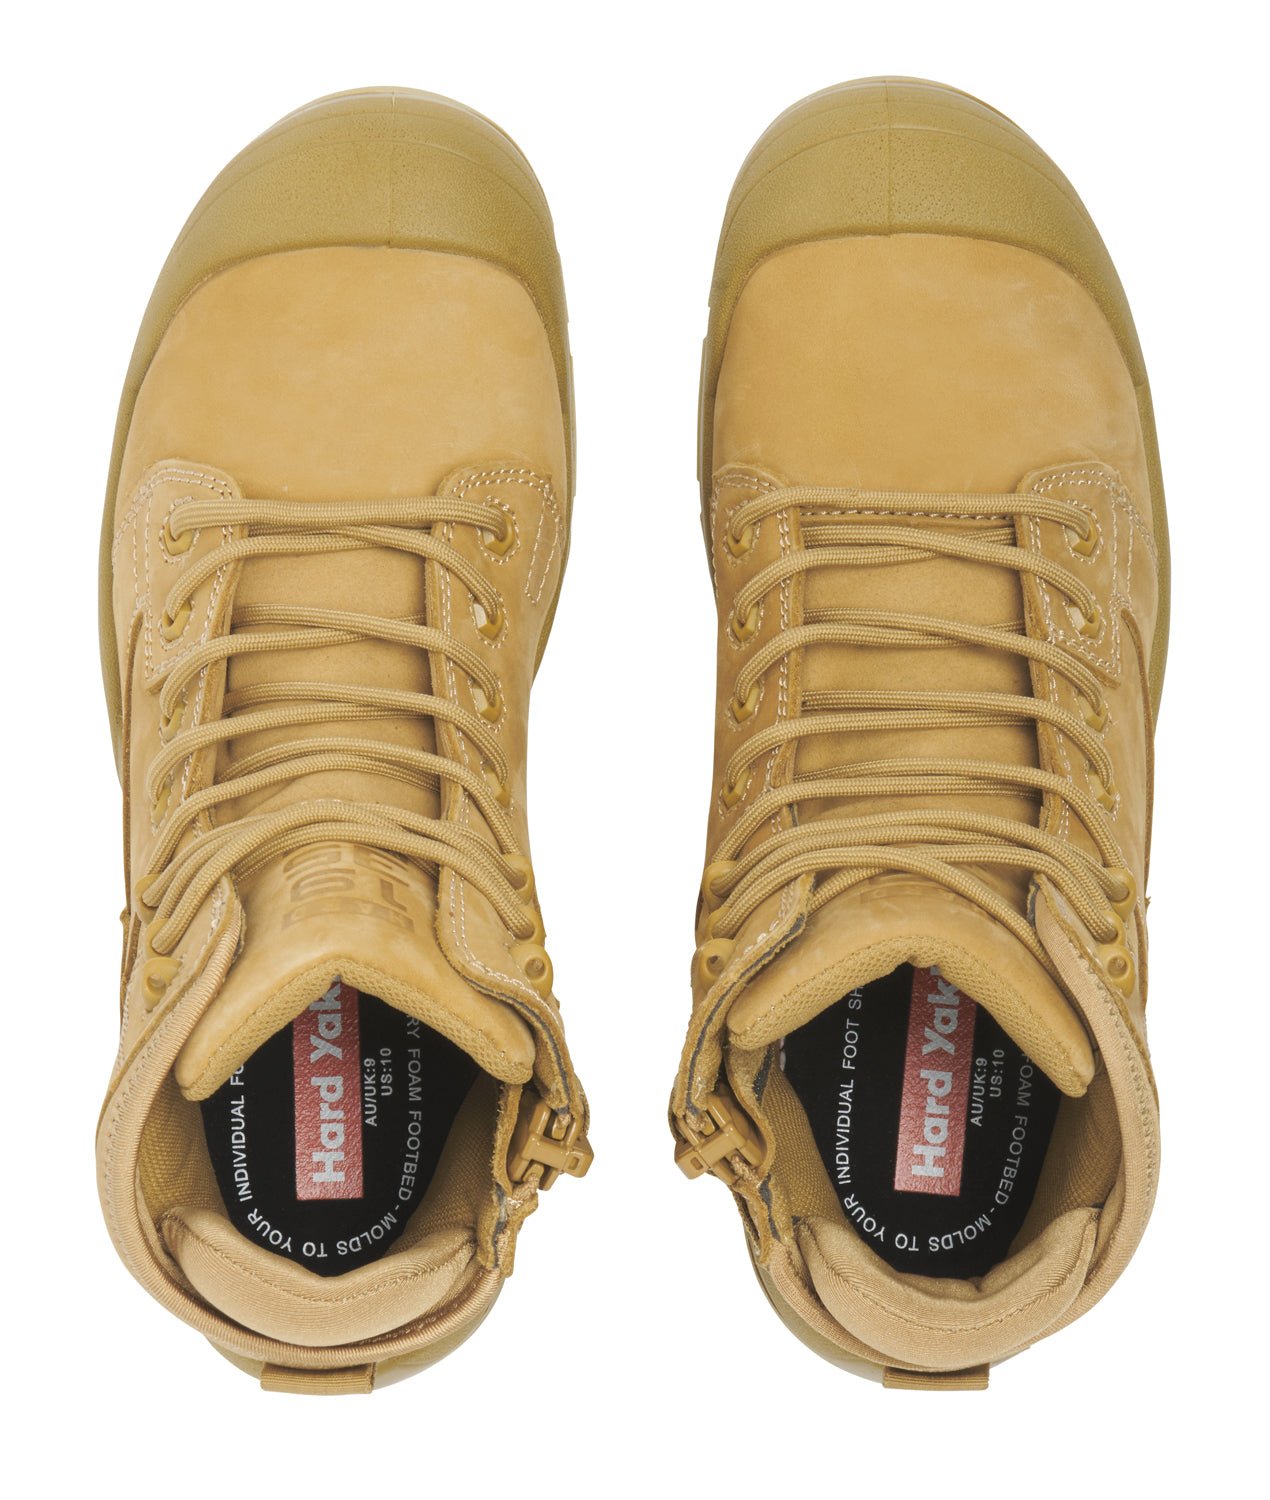 Hard Yakka Safety Boots | Hard Yakka Boots – BIG Boots UK